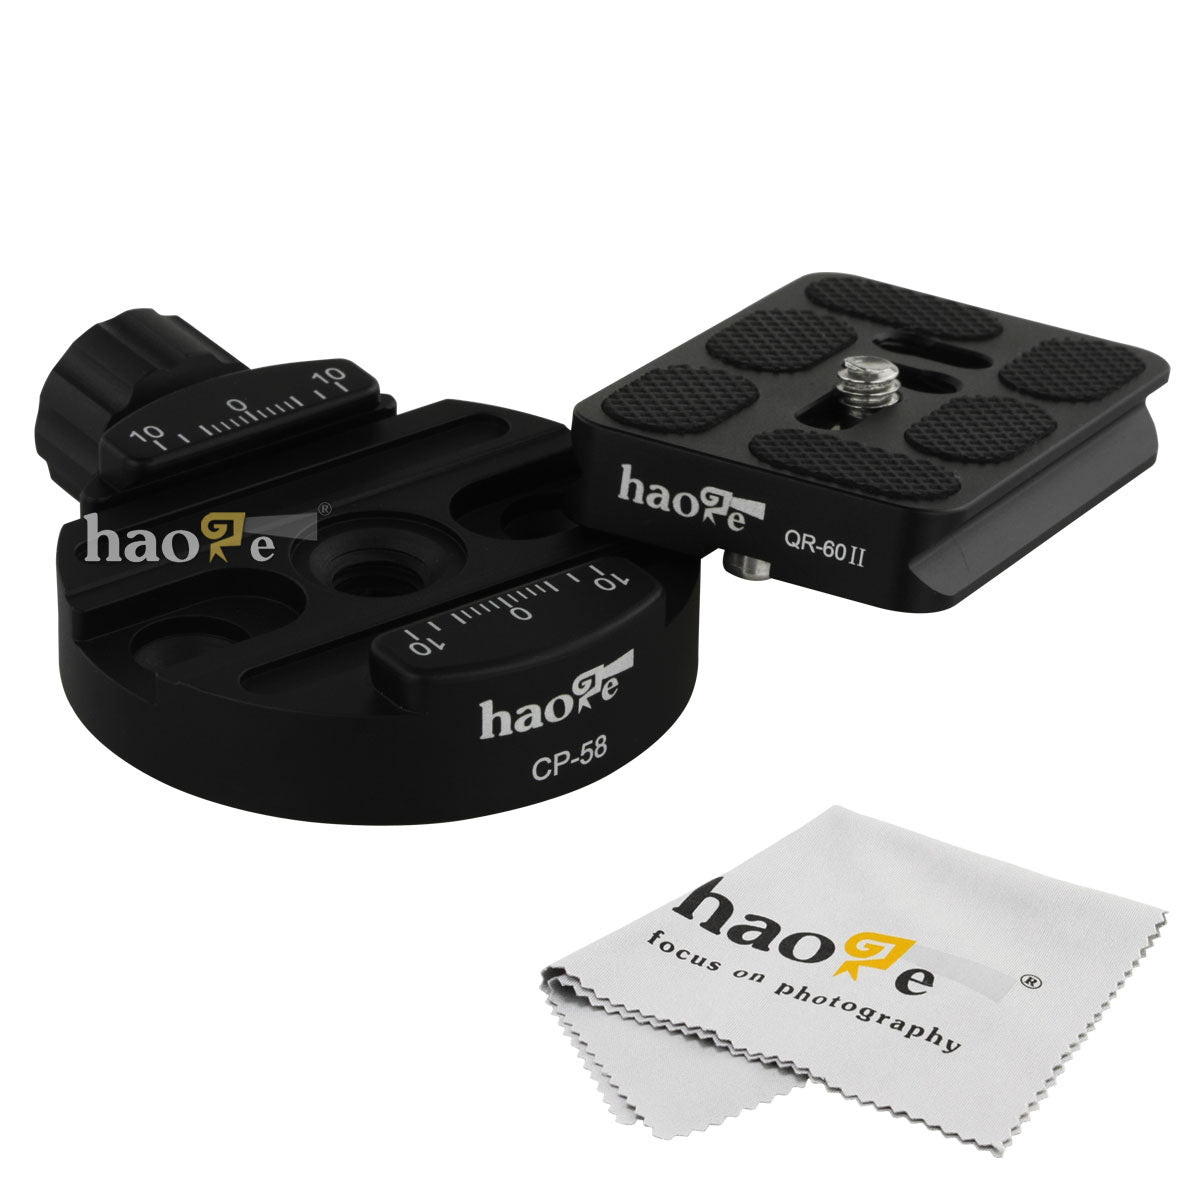 Haoge 58mm Screw Knob Clamp Adapter with 60mm QR Quick Release Plate for Camera Tripod Ballhead Monopod Ball Head Fit Arca Swiss